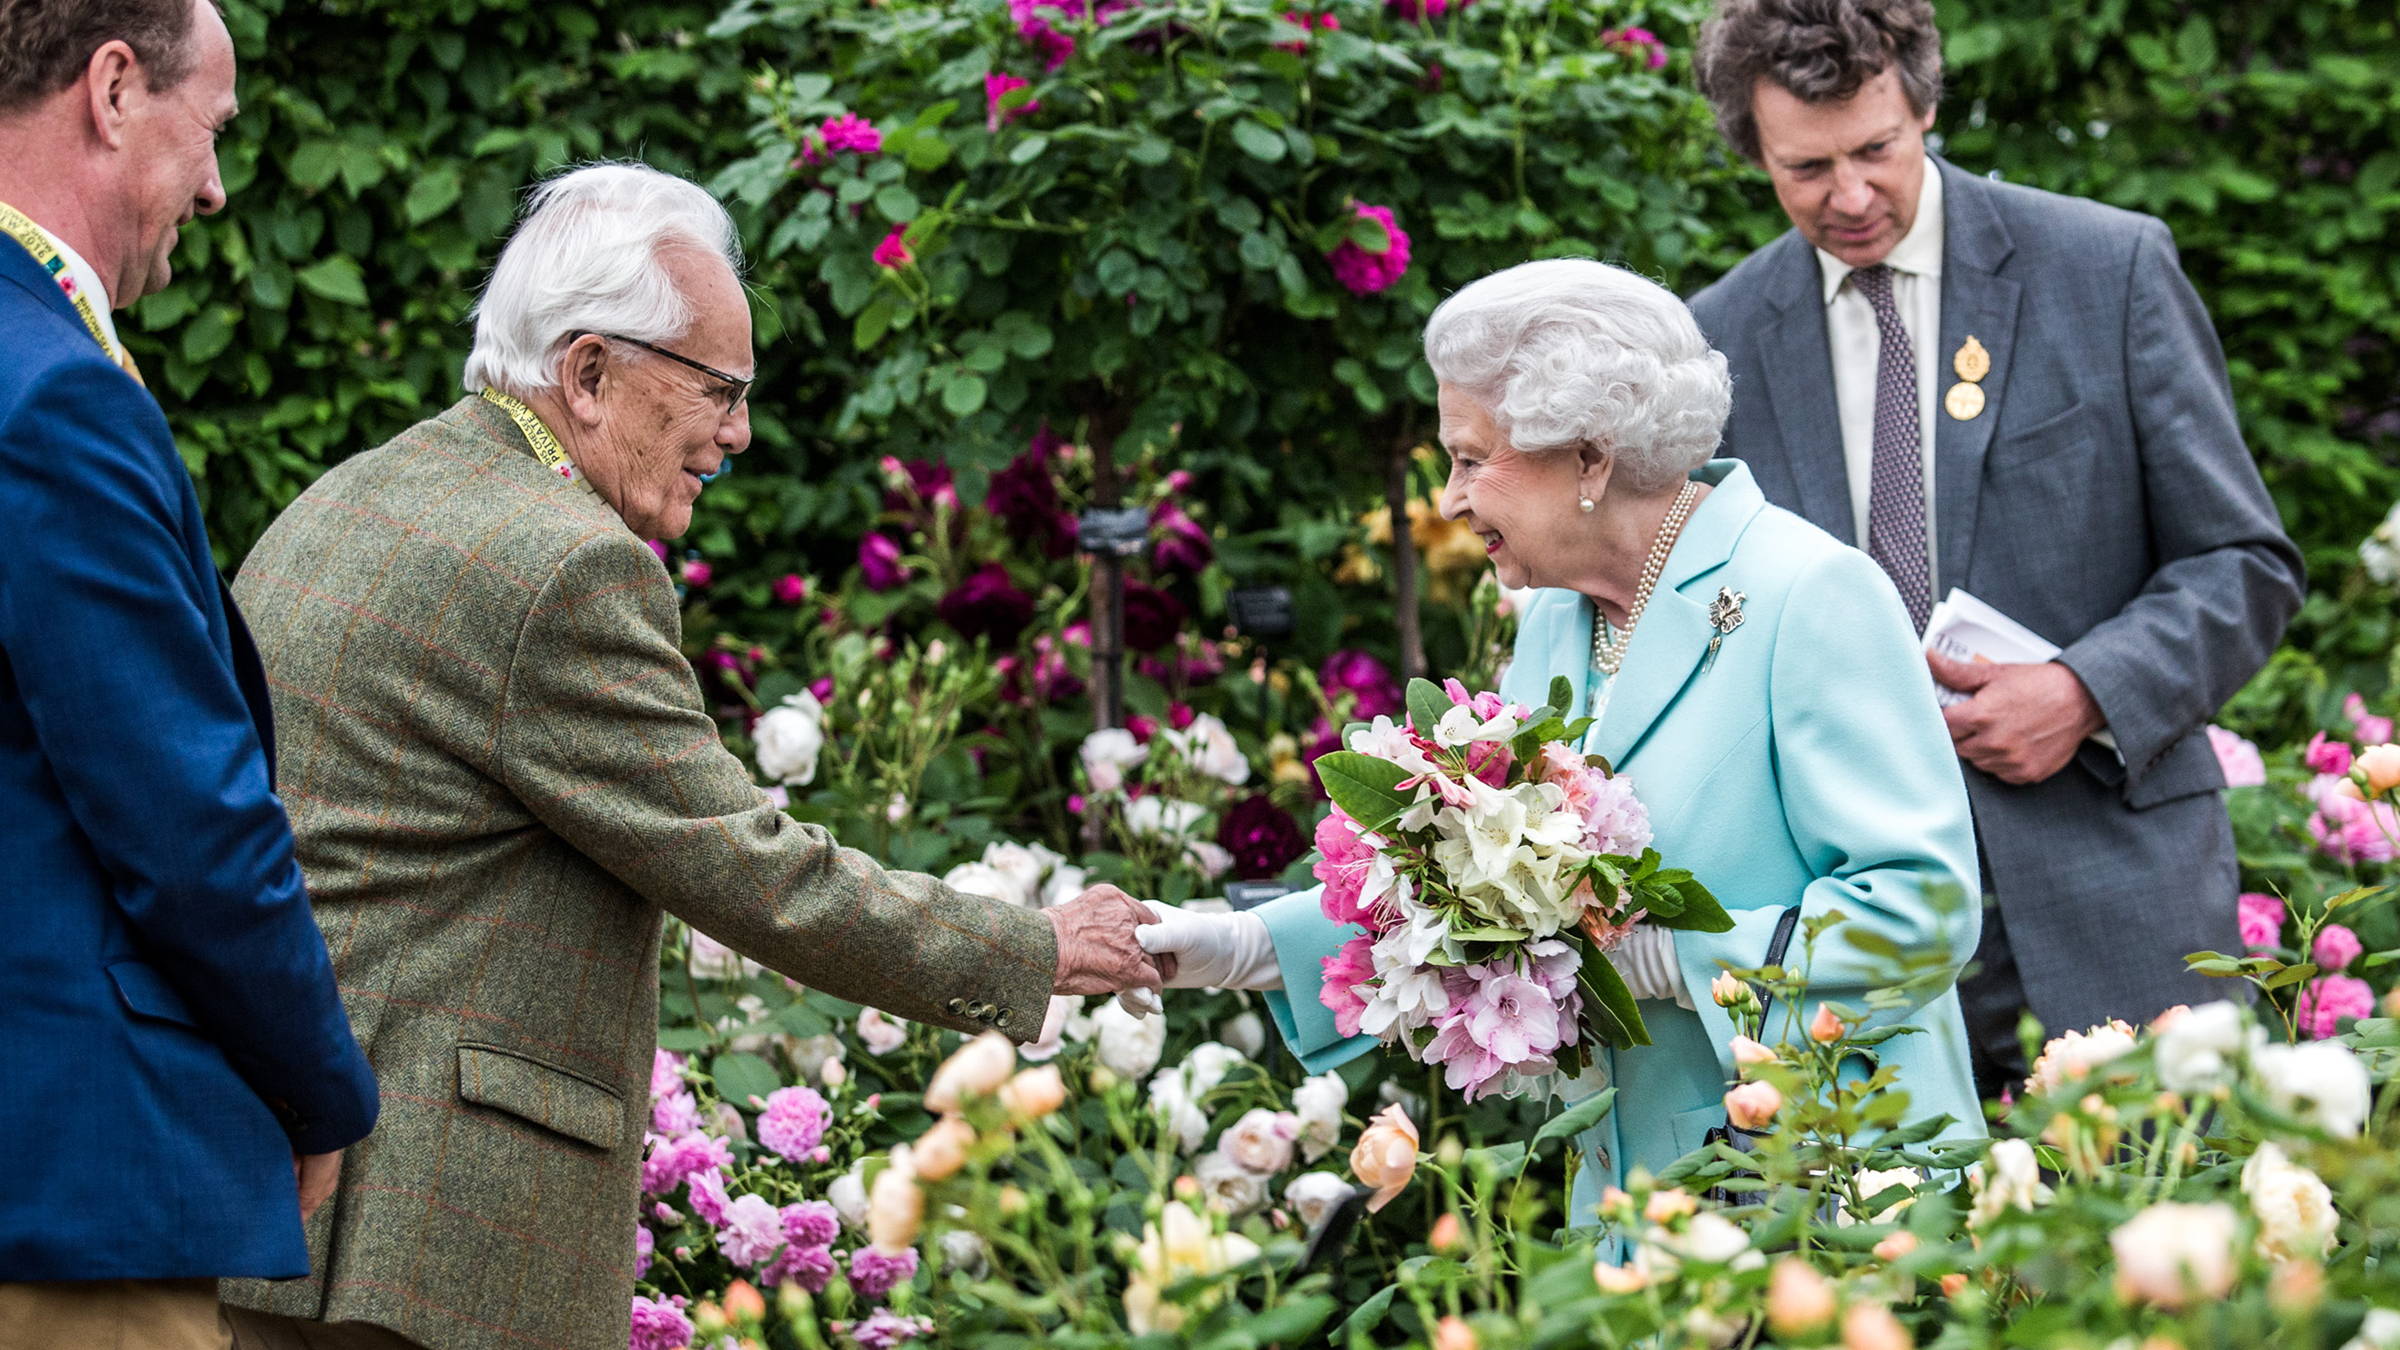 David C H Austin greets Her Majesty Queen Elizabeth II at Chelsea Flower Show